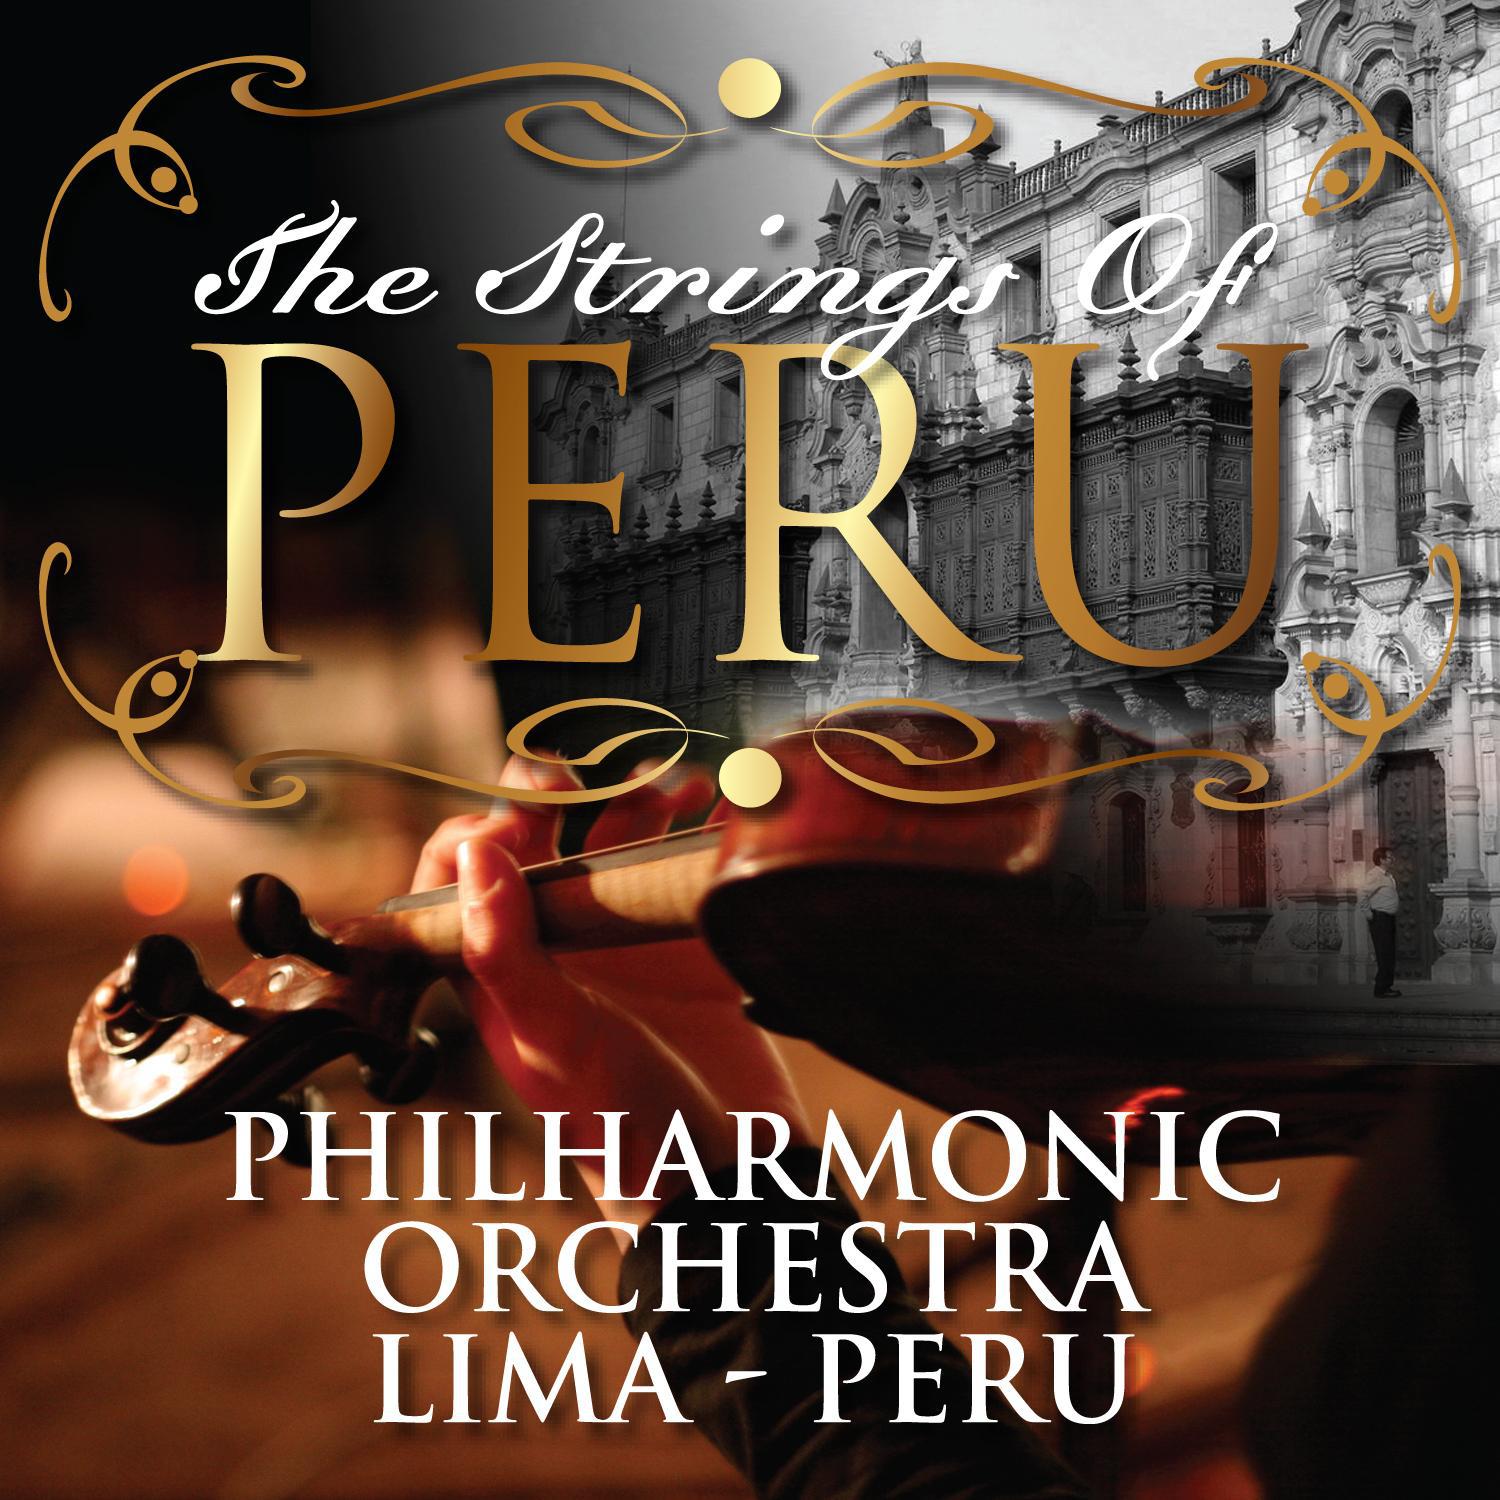 The Strings of Peru